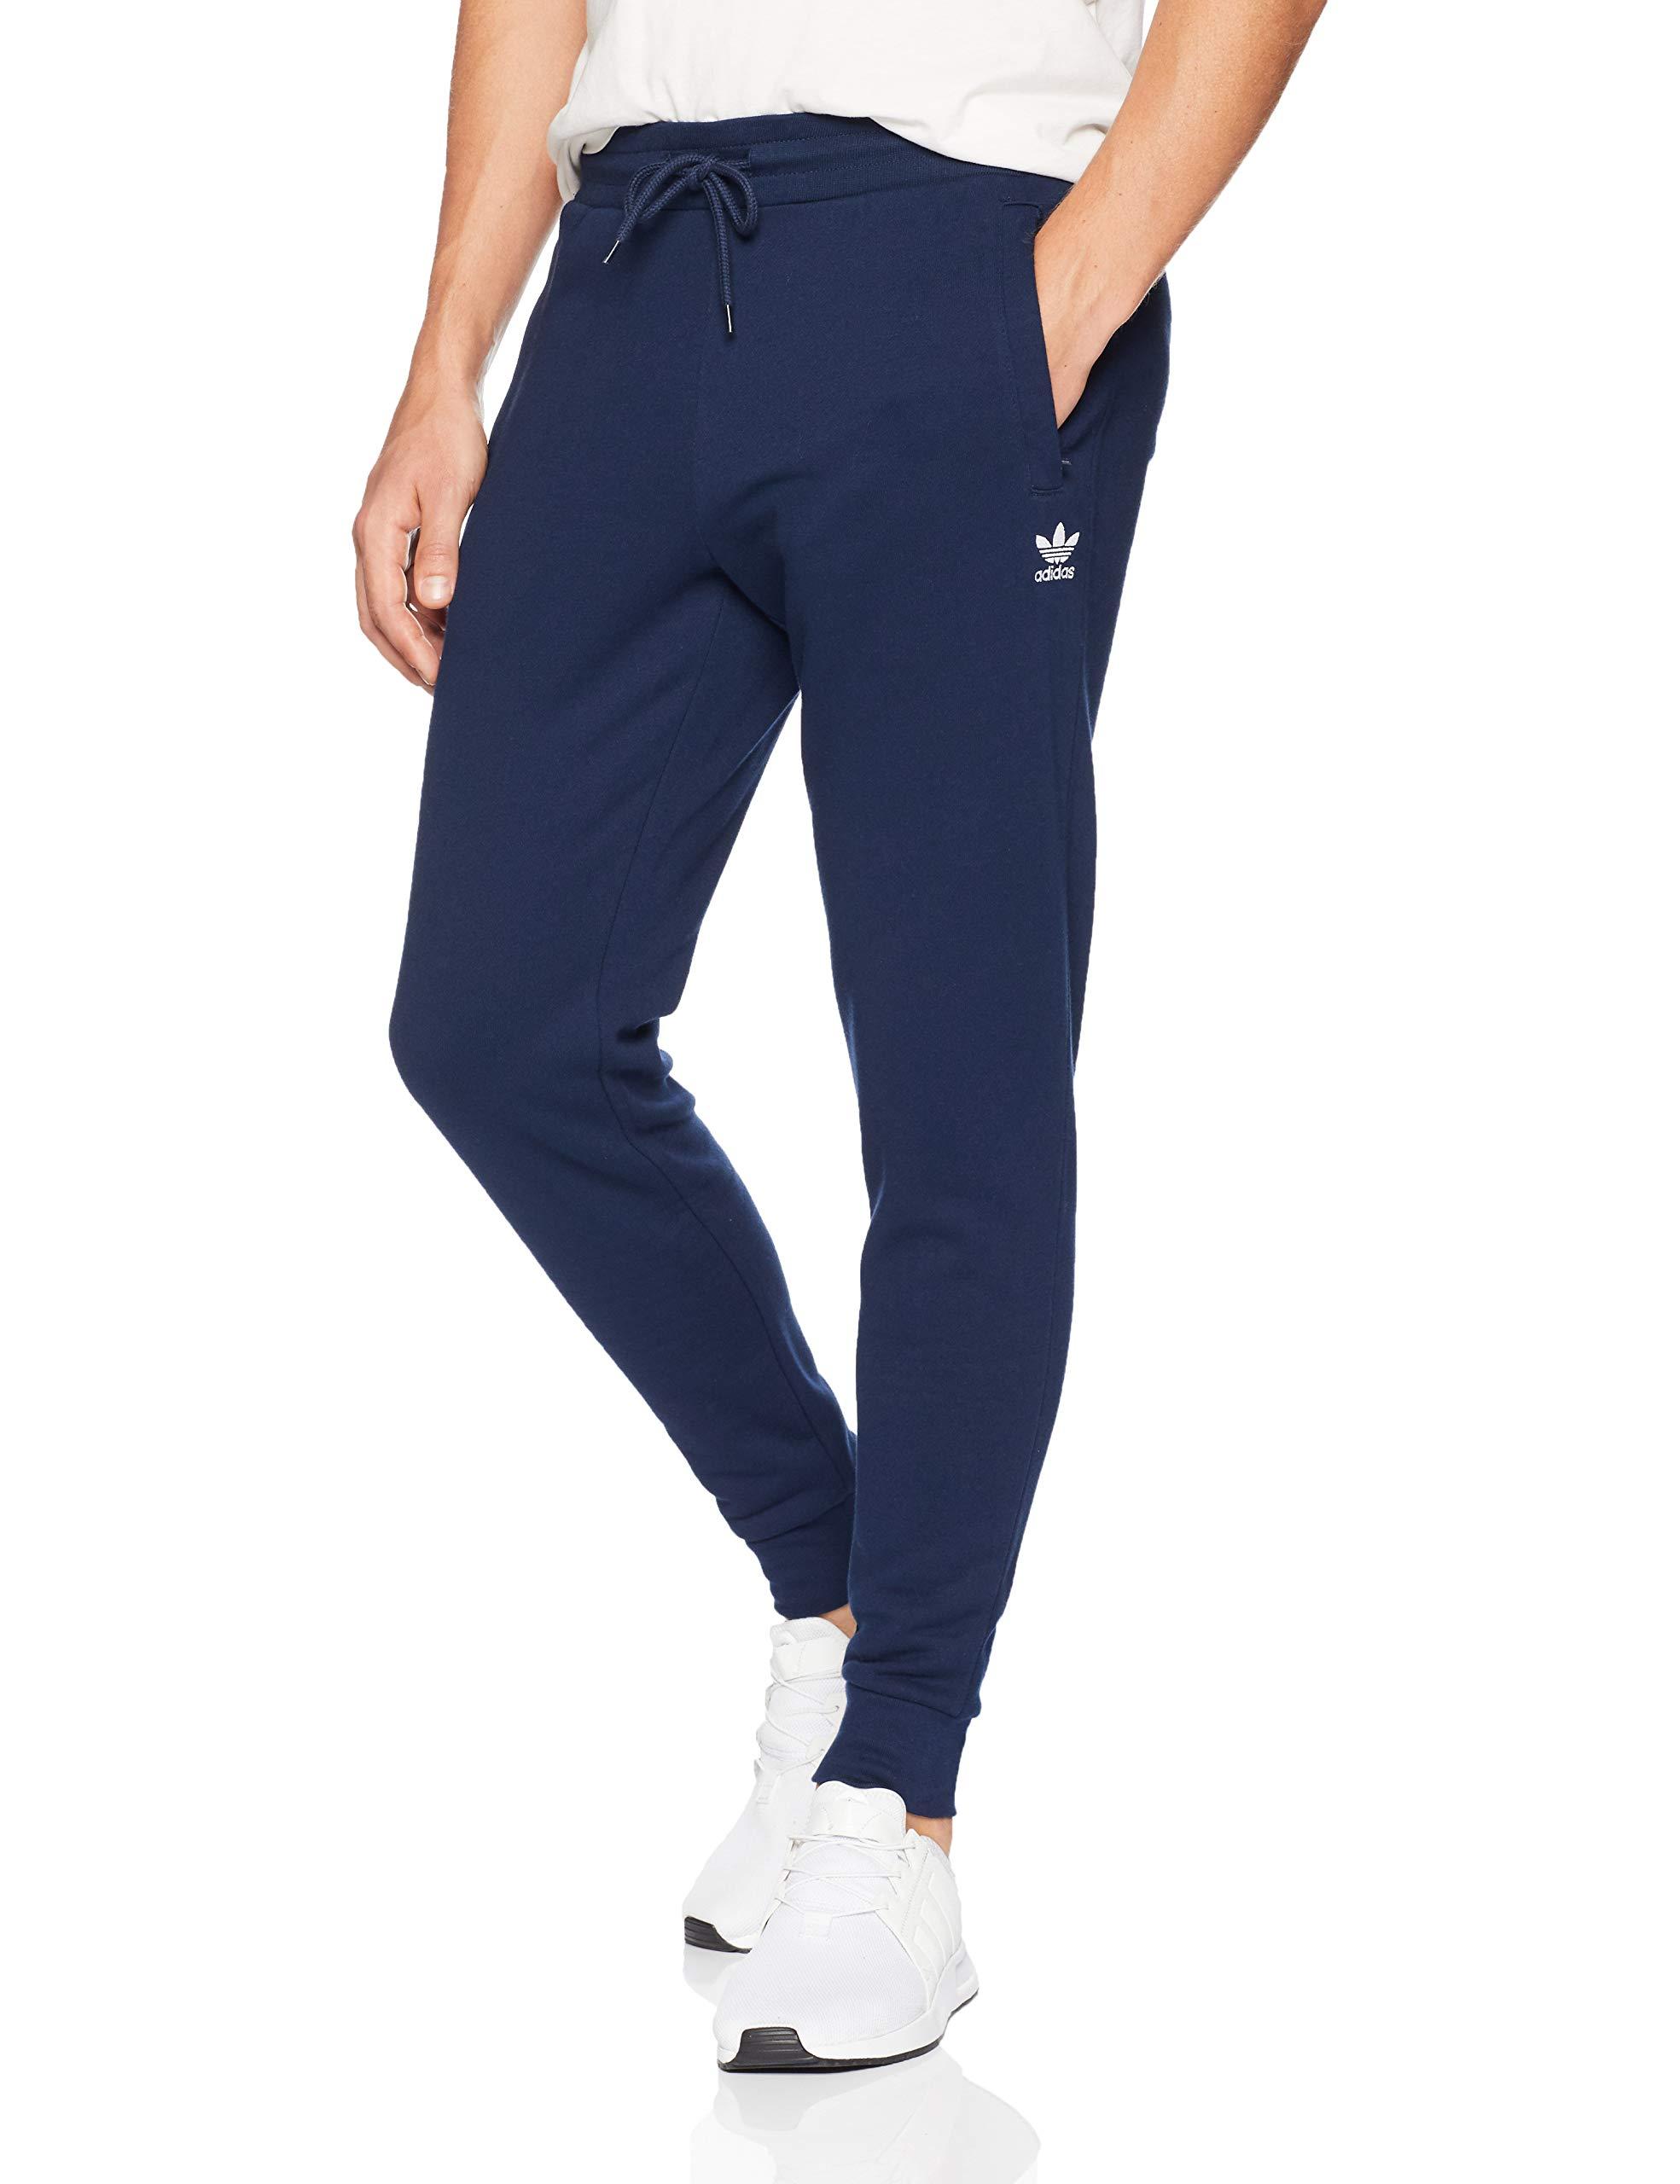 adidas Originals Slim-fit Fleece Jogger Pants in Blue for Men - Lyst